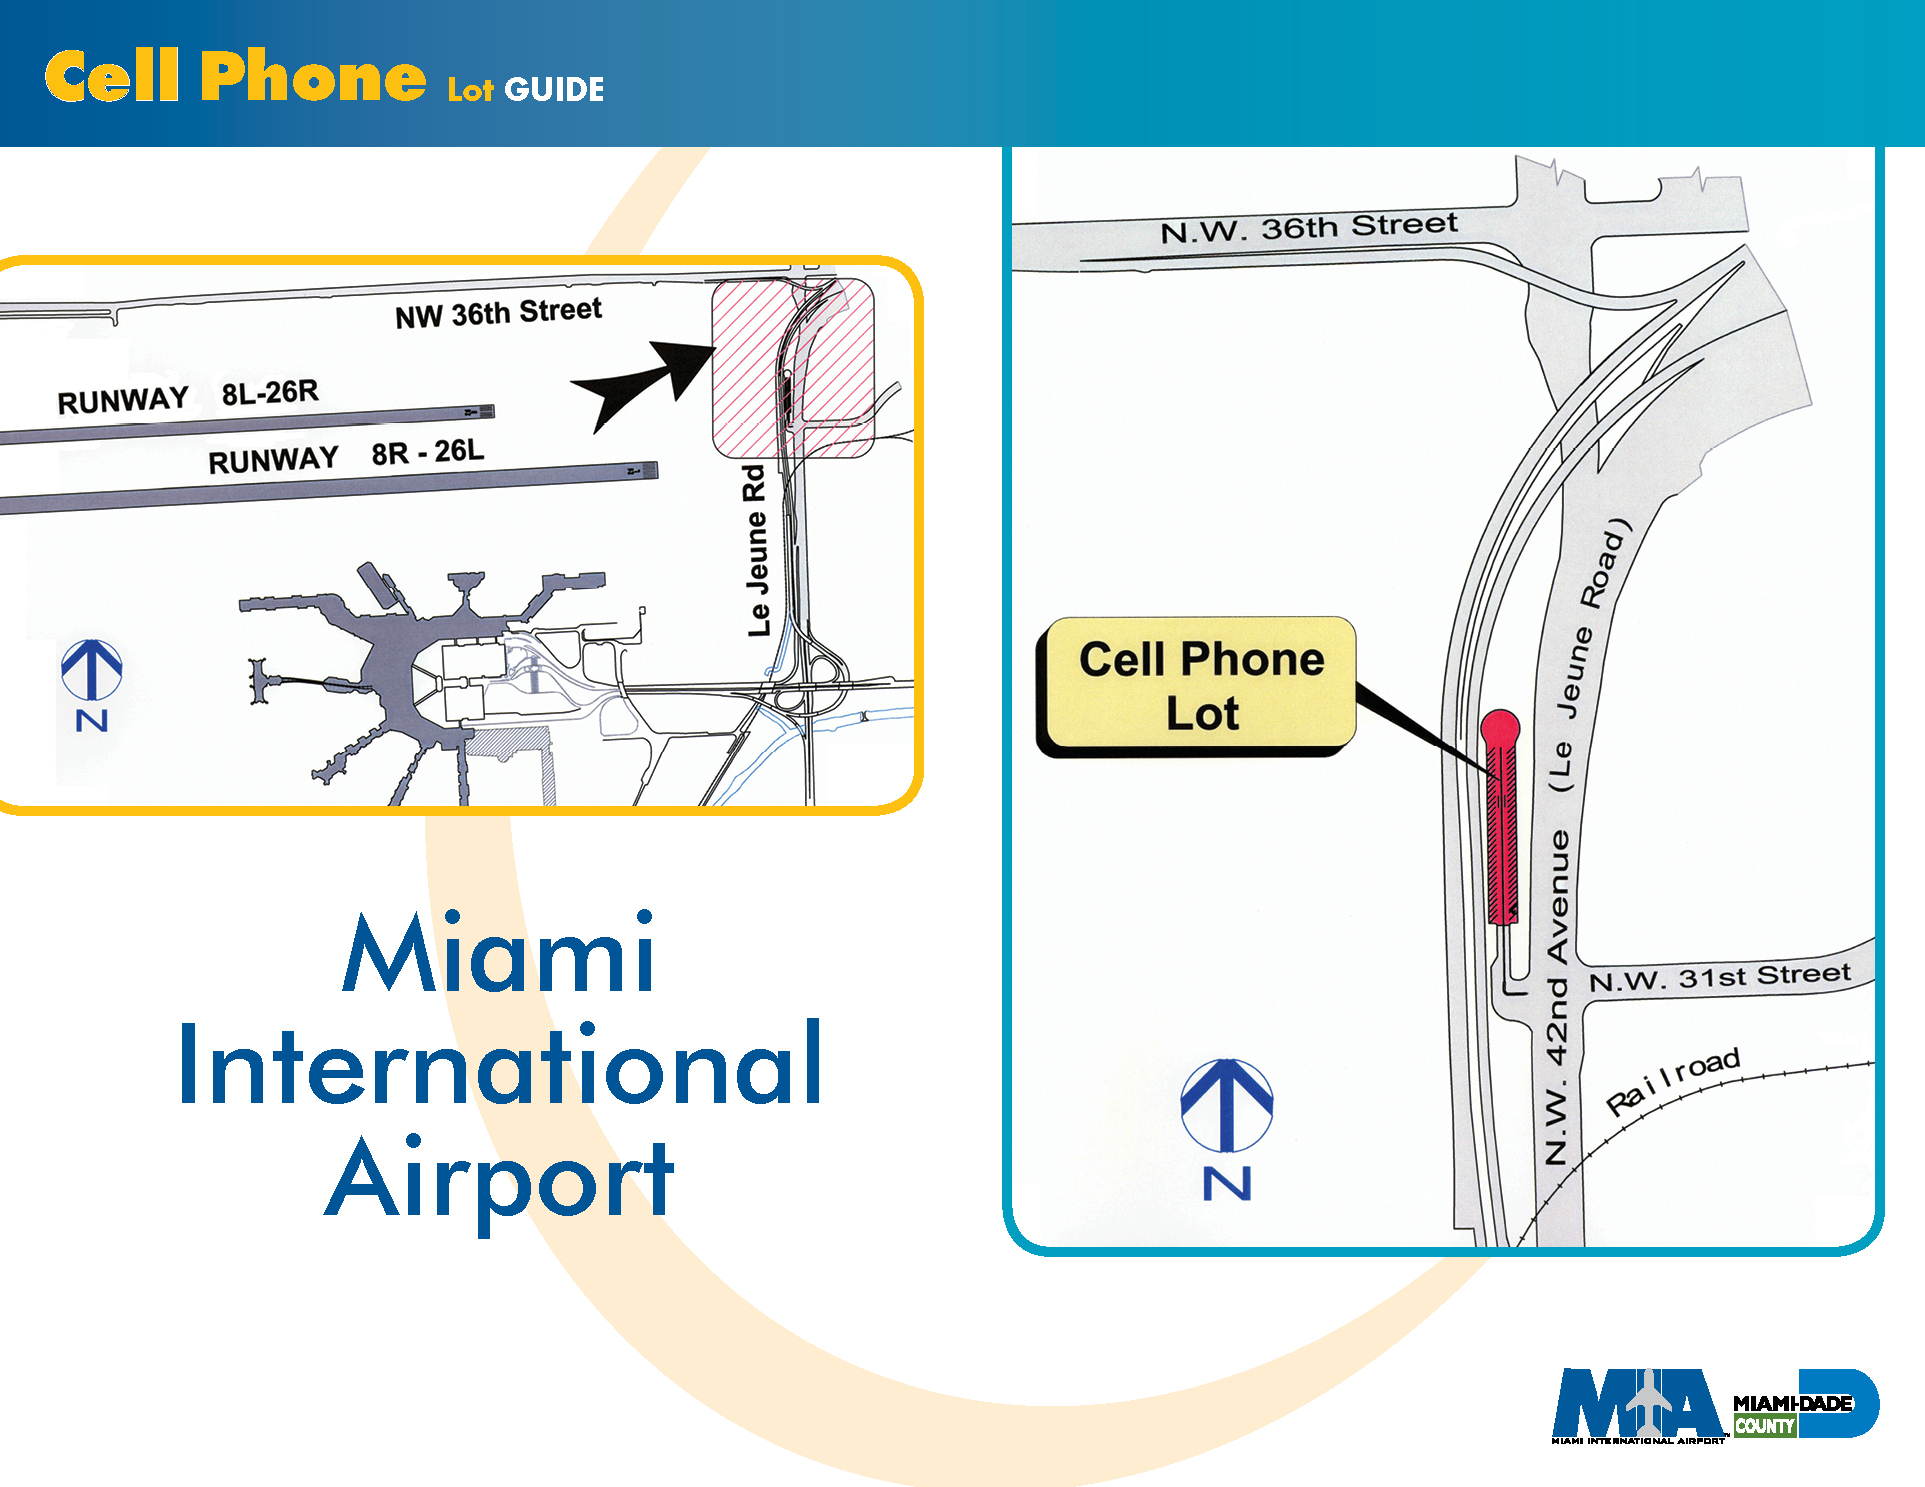 Airport Parking - Miami International Airport